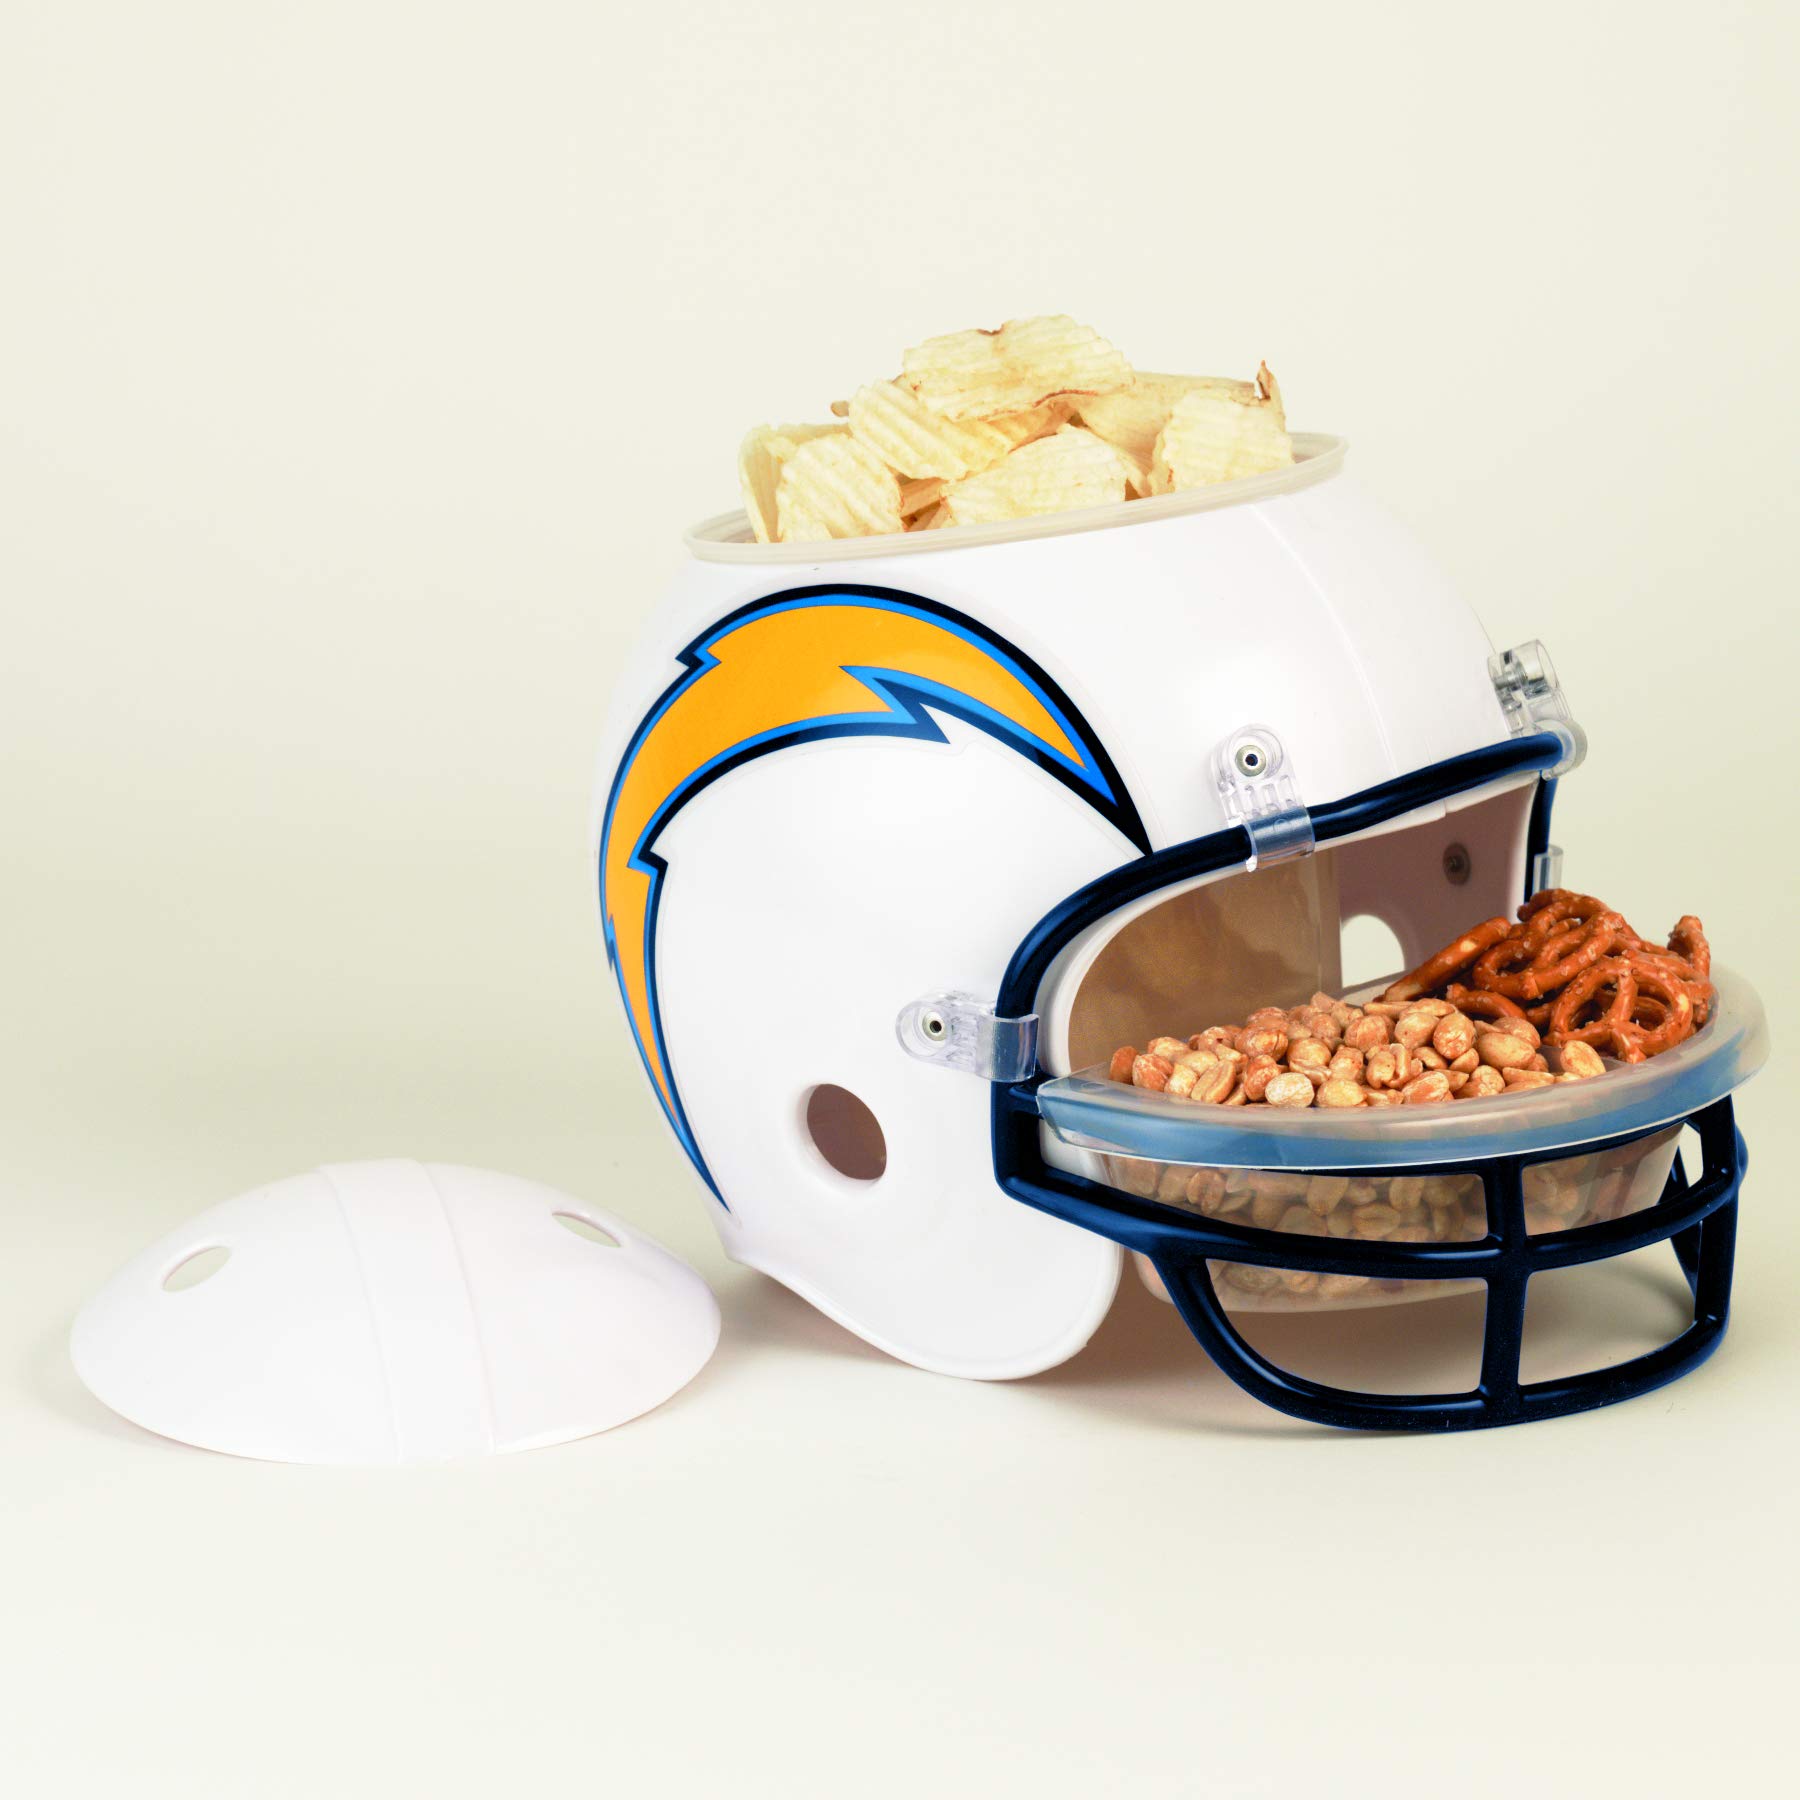 WinCraft San Diego Chargers American Football NFL Snack Helmet